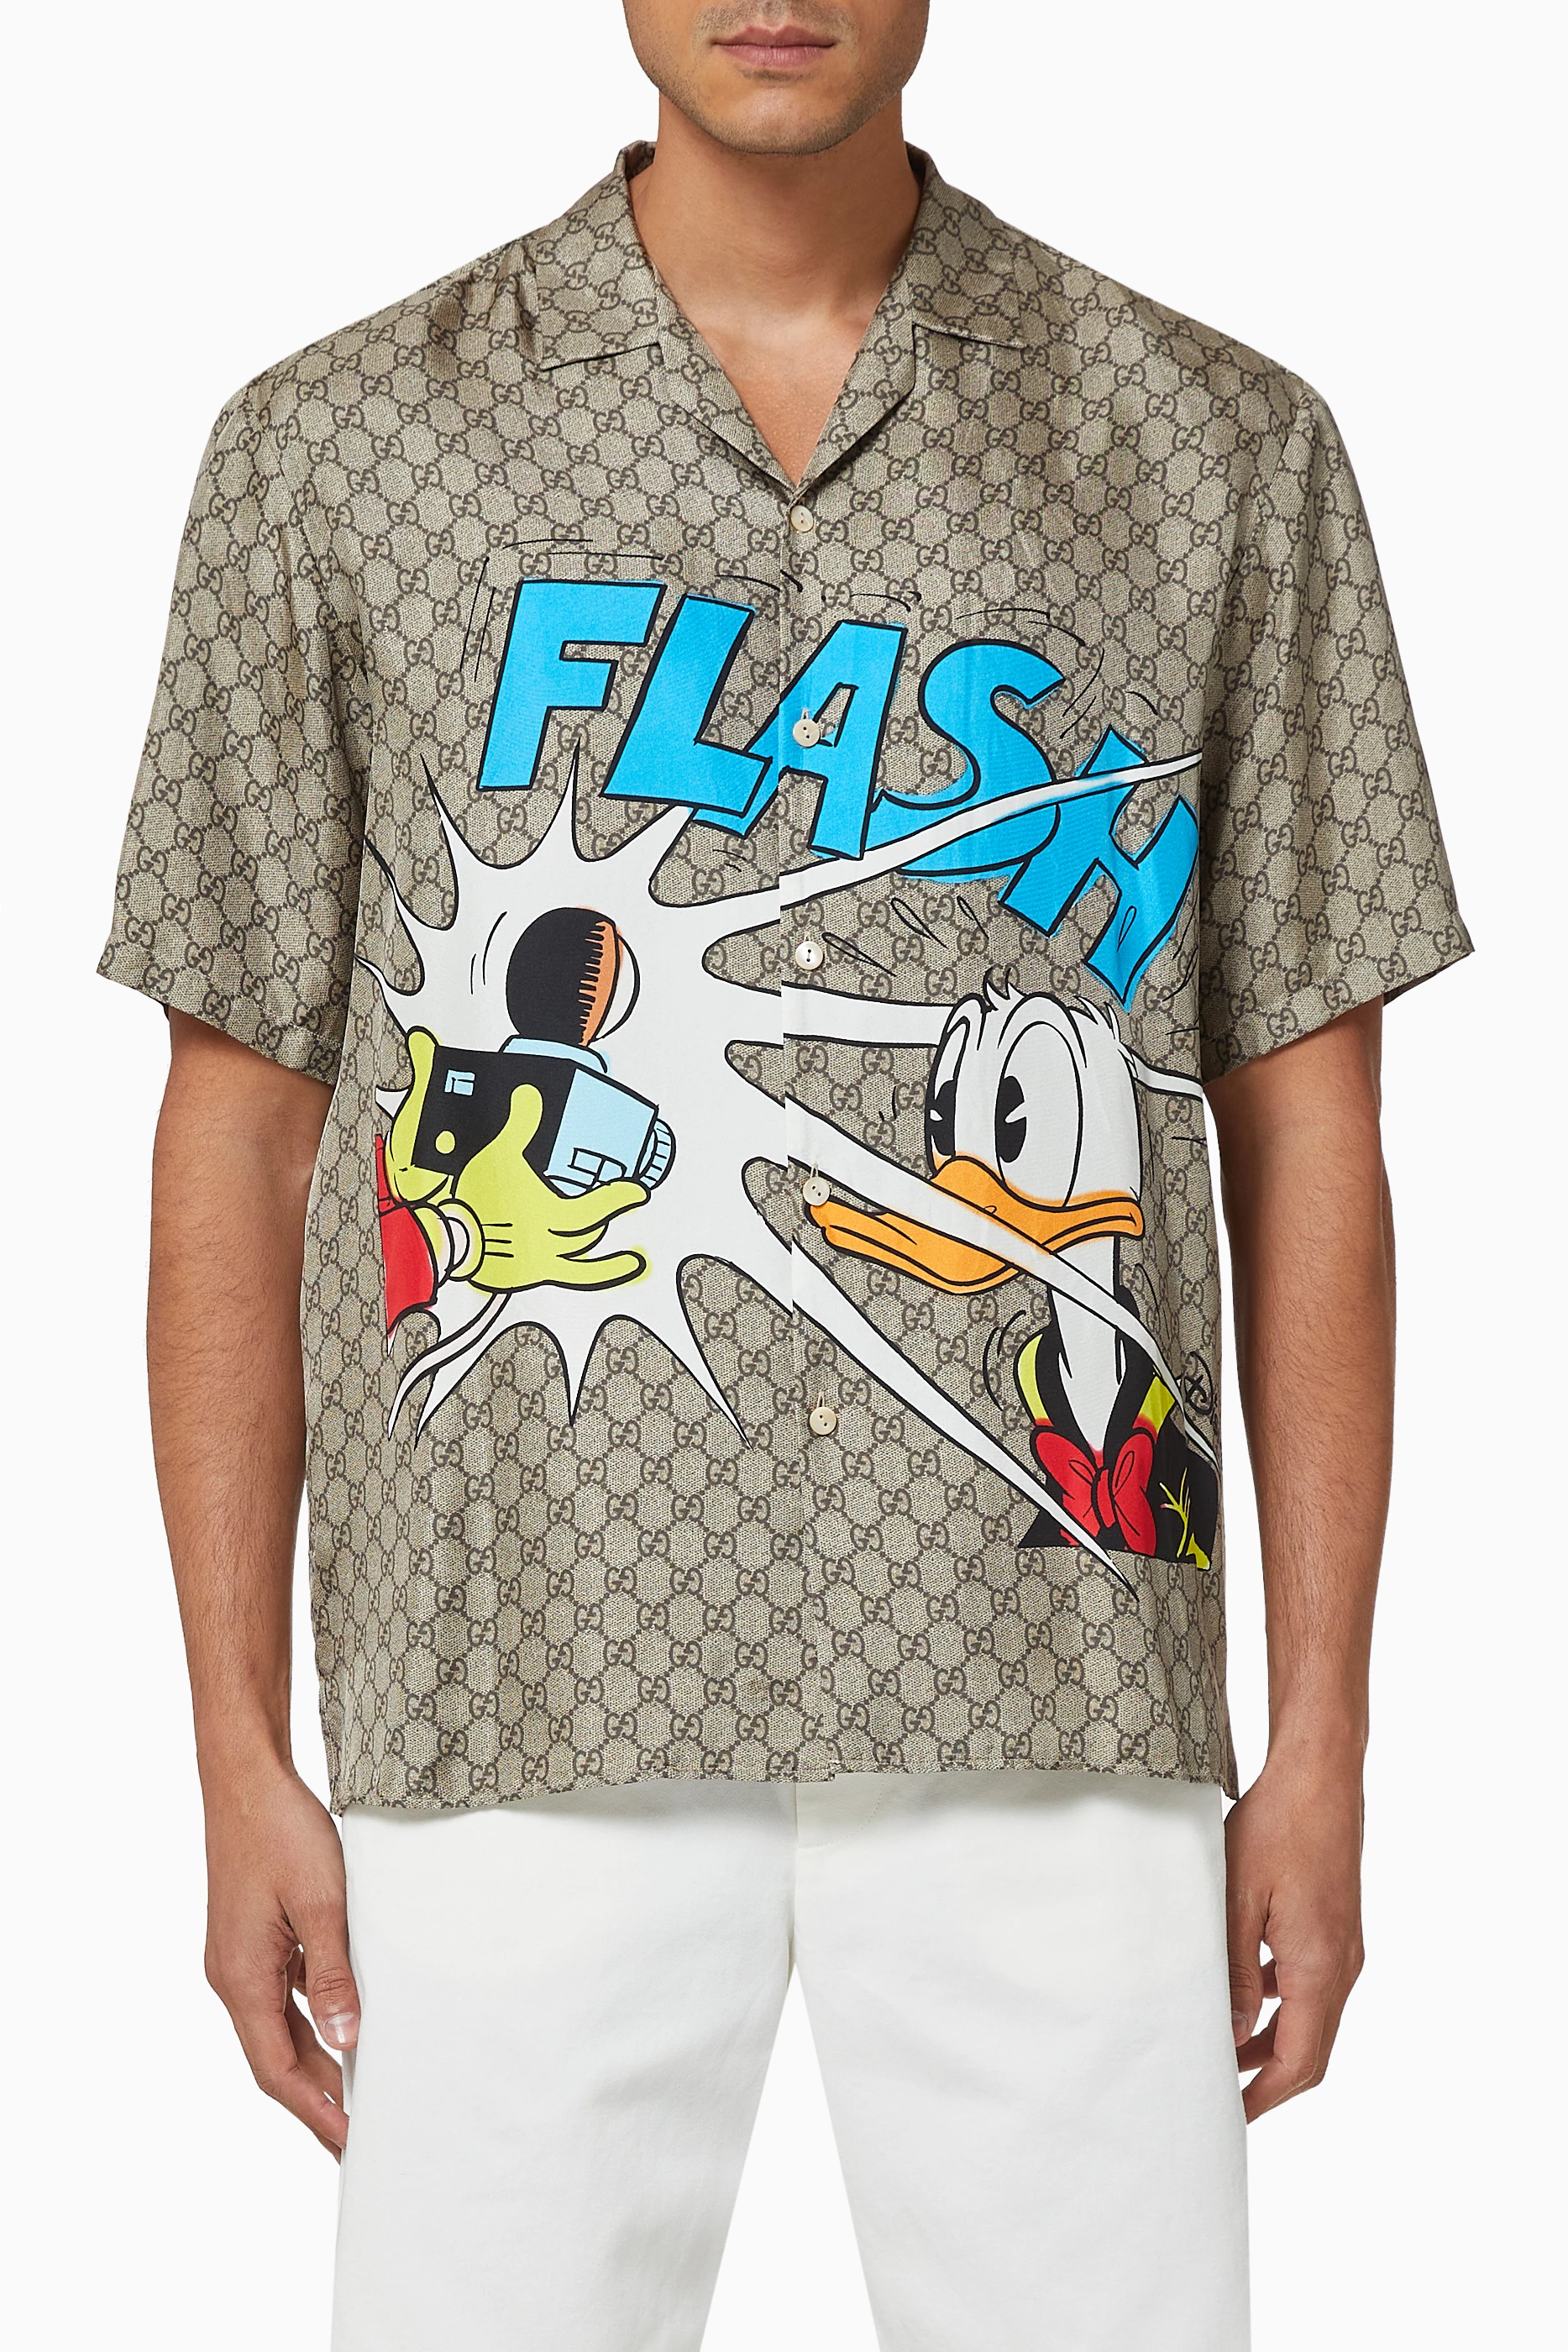 Gucci Grey Disney Edition Donald Duck 'Flash' T-Shirt for Men